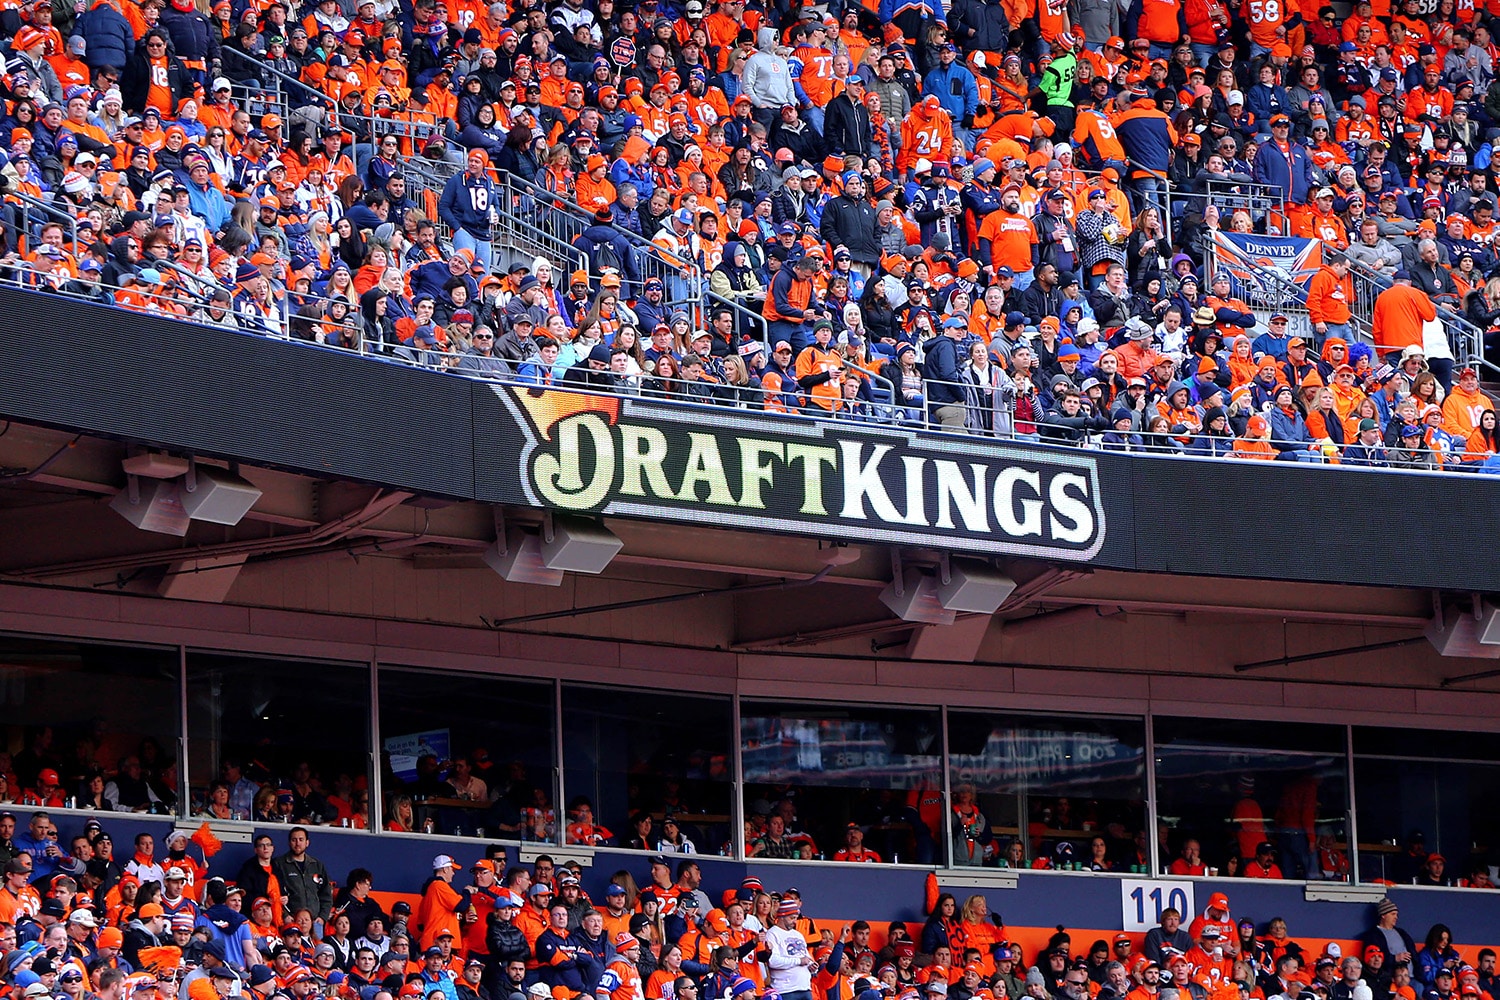 Digital signage of for Draft Kings shown inside an NFL stadium.